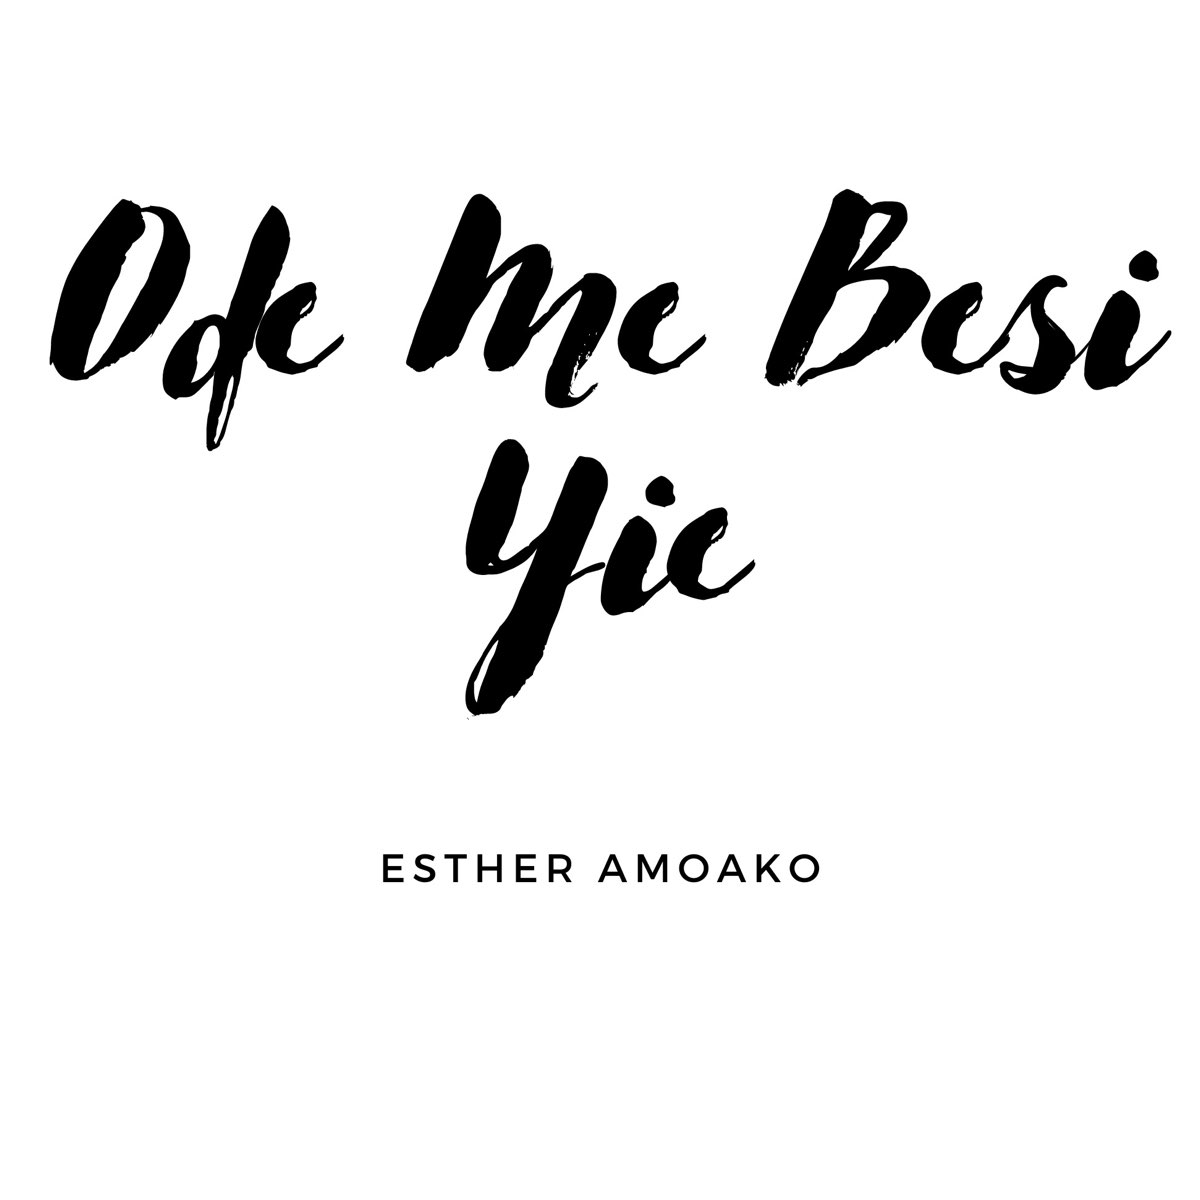 Esther Amoako - Ode Me Besi Yie